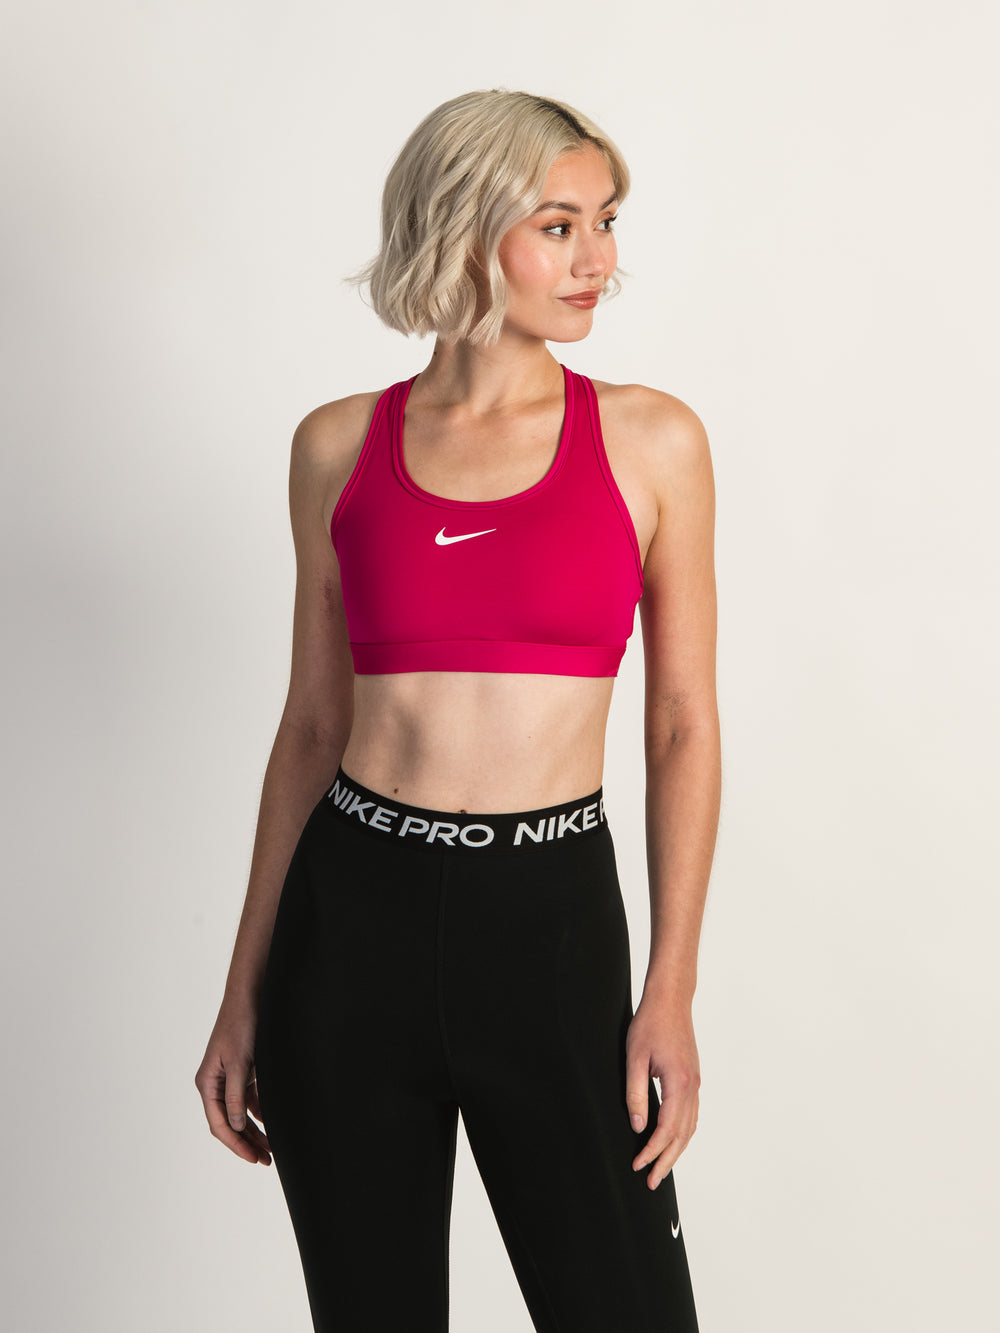 Nike Dri-Fit Youth Sports Bra size extra large